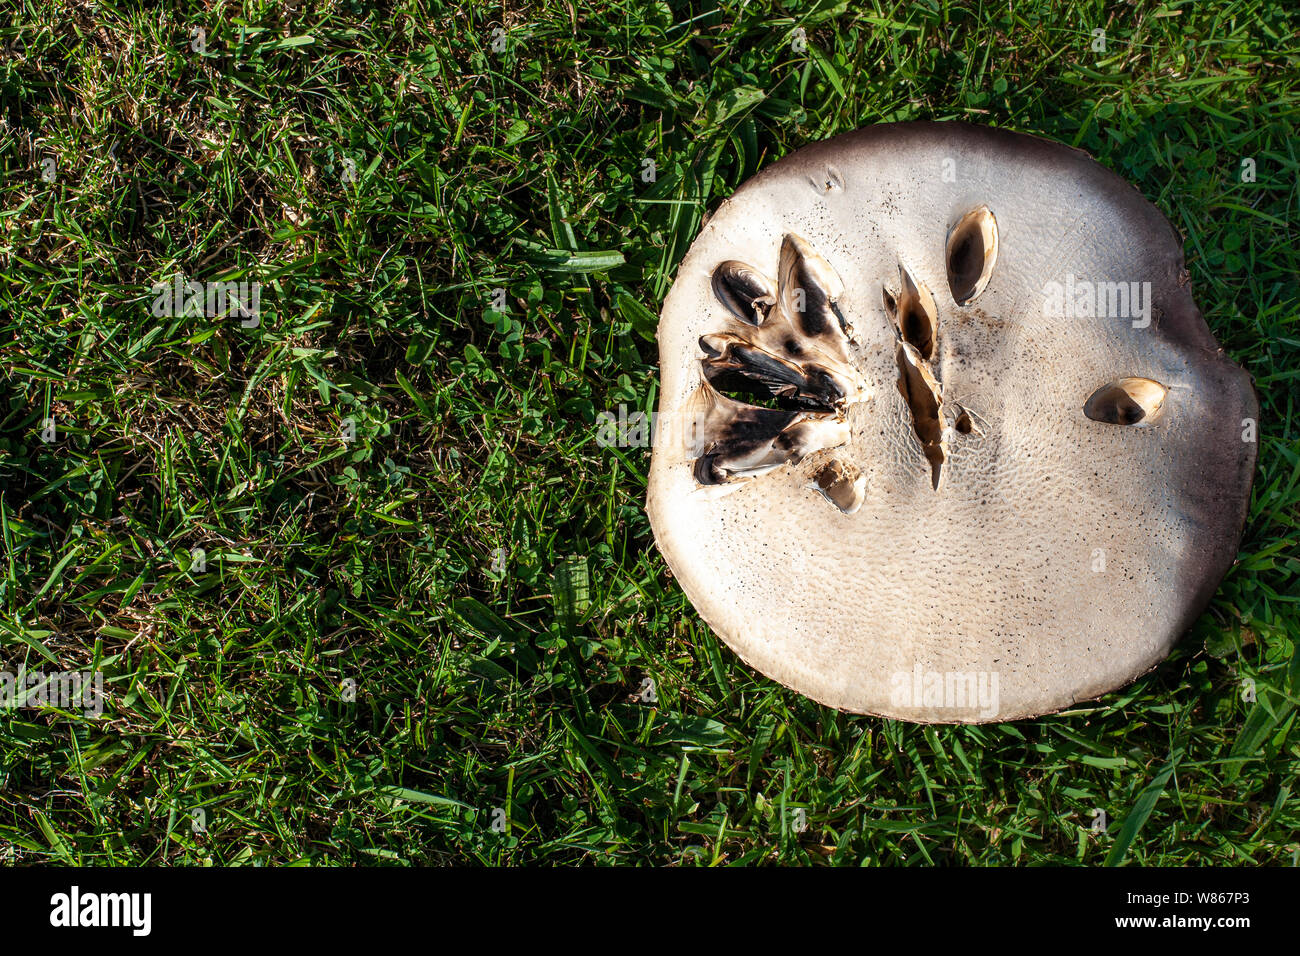 Mushrooms Growing On A Garden Lawn Stock Photo 263210587 Alamy